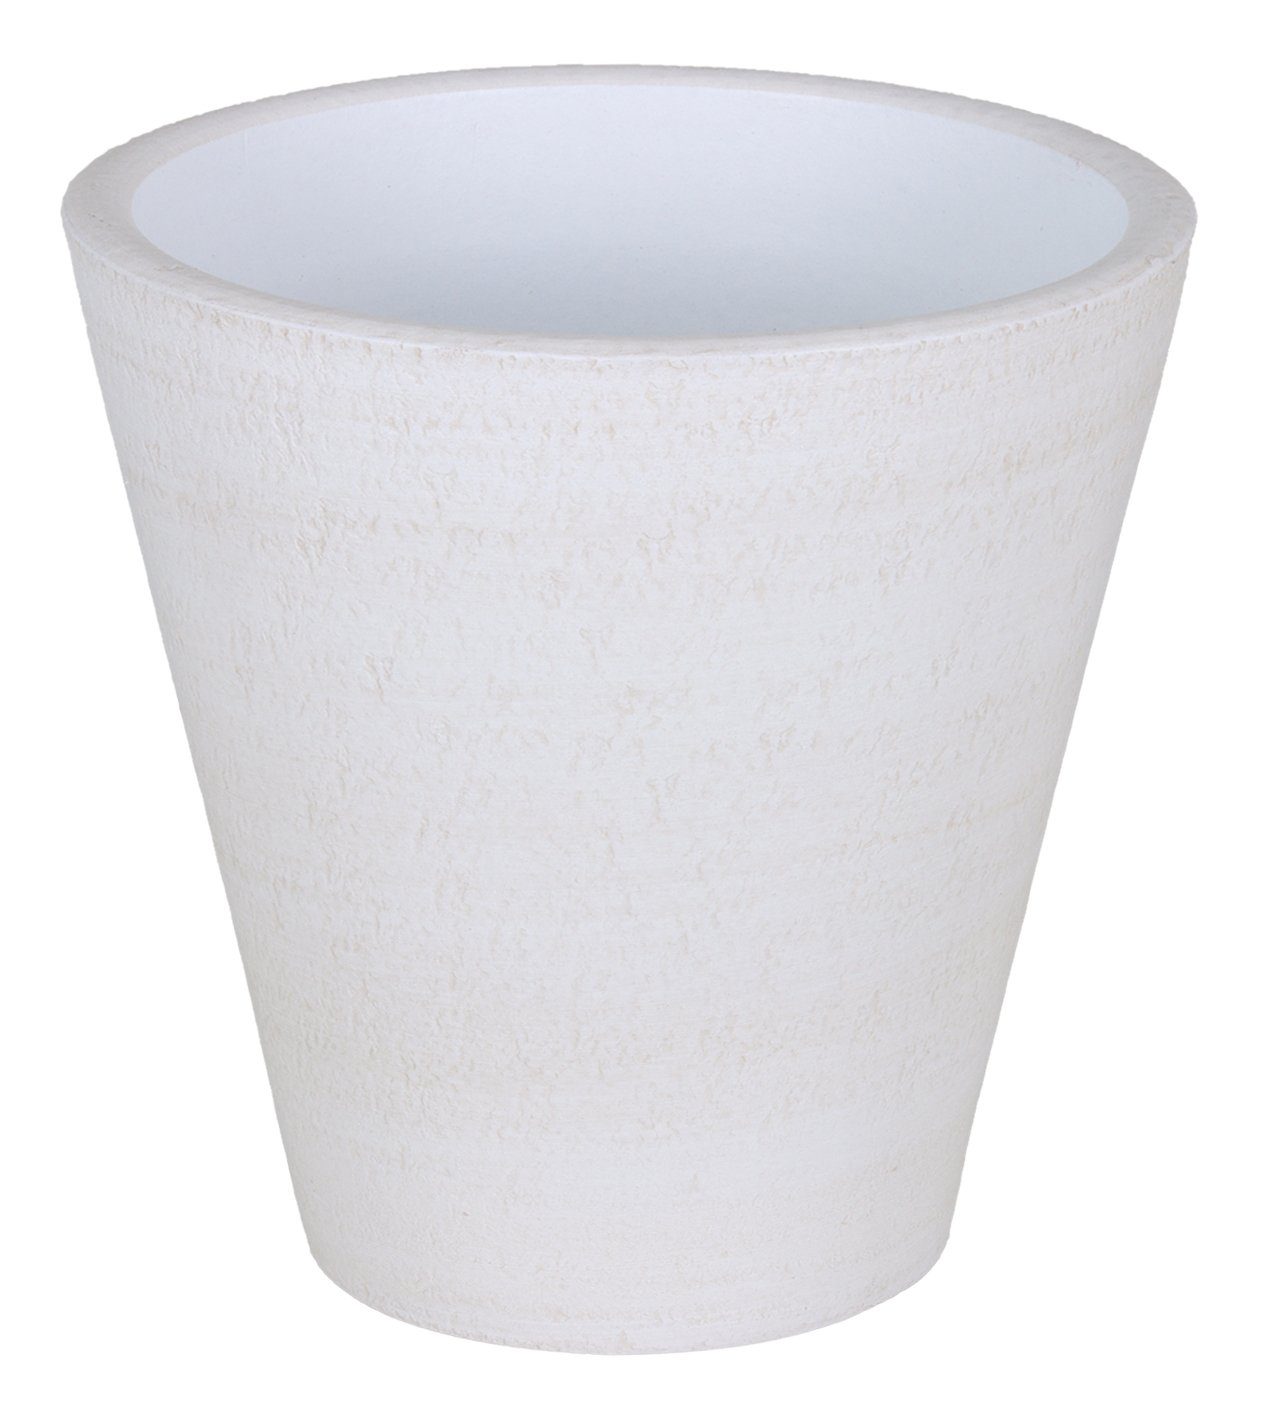 Creme tegawo konisch Lava-Conica, handgemacht Keramik-Vase Übertopf Strukturoptik, mit